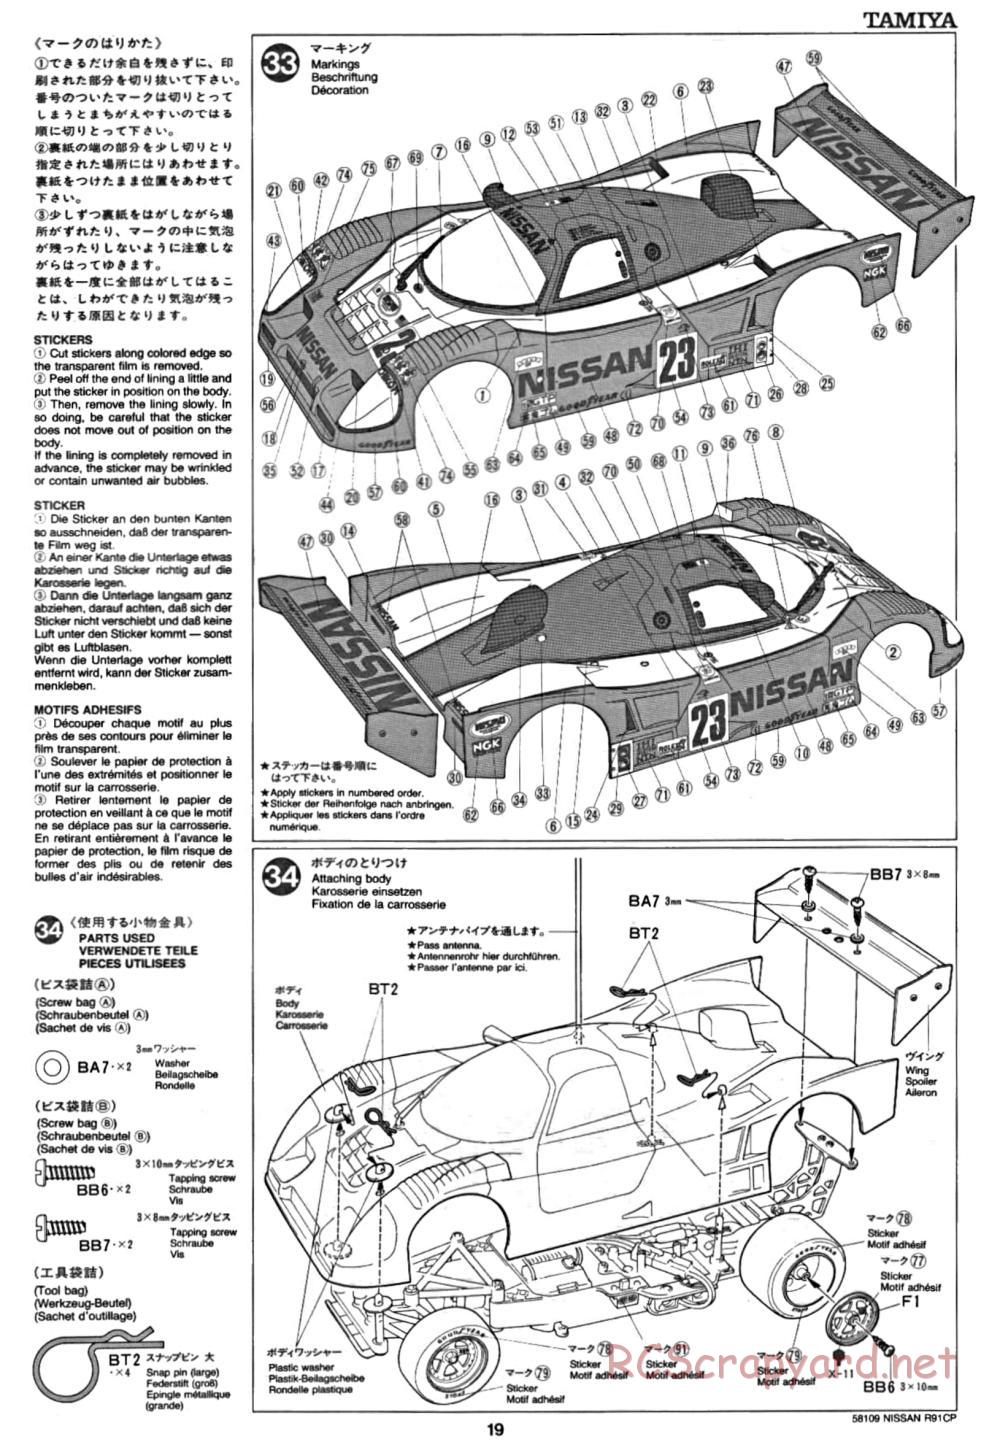 Tamiya - Nissan R91CP - Group-C Chassis - Manual - Page 19